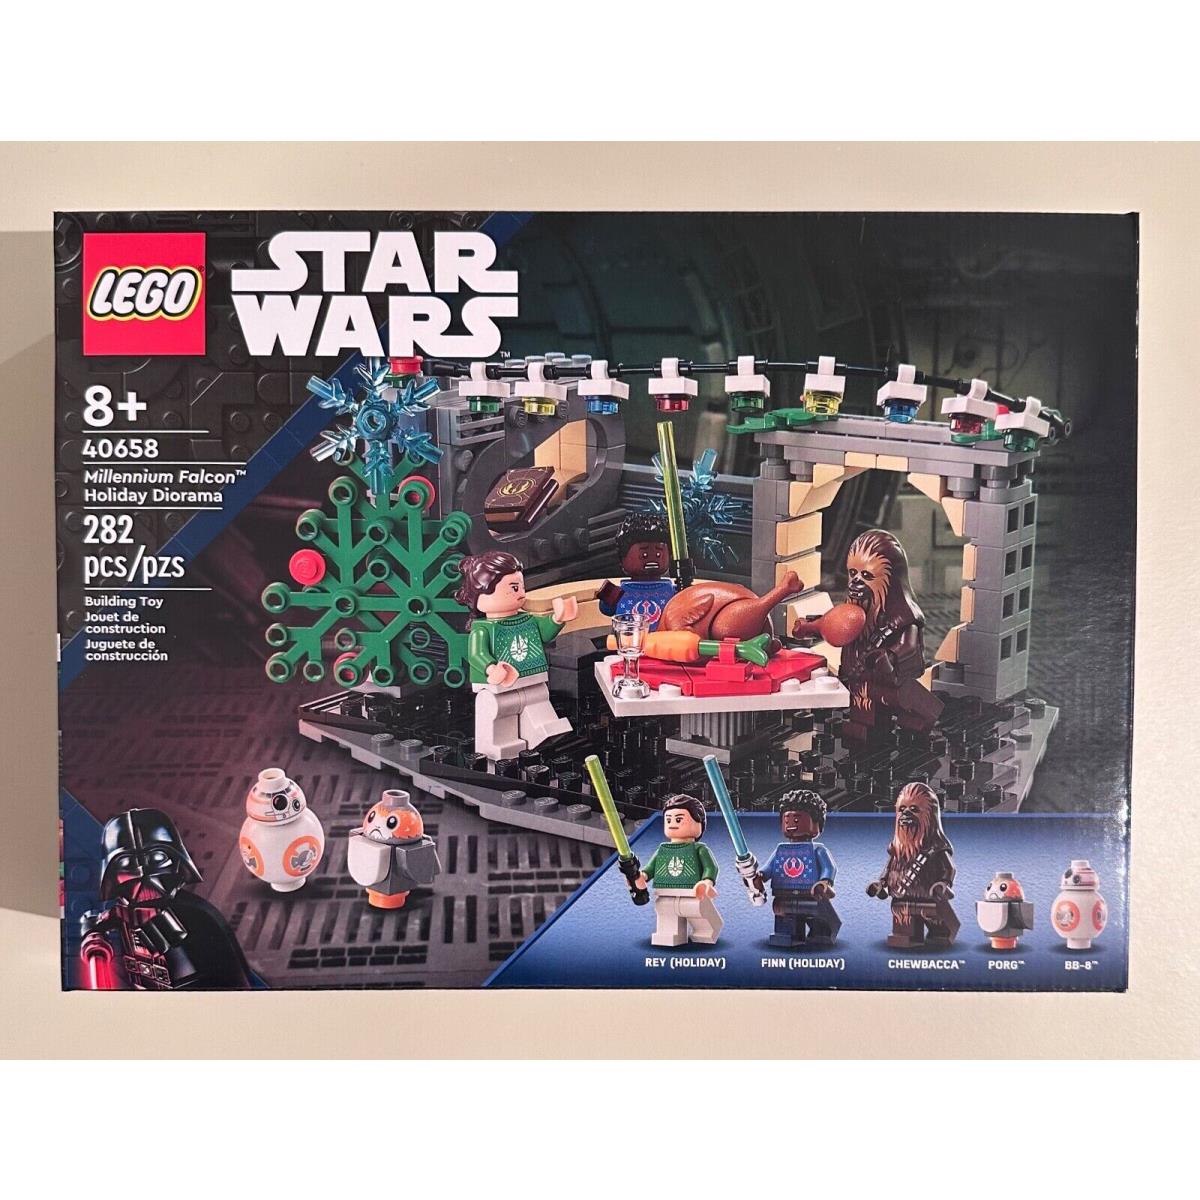 Lego Star Wars 40658 Millennium Falcon Holiday Diorama Building Kit Toy Set